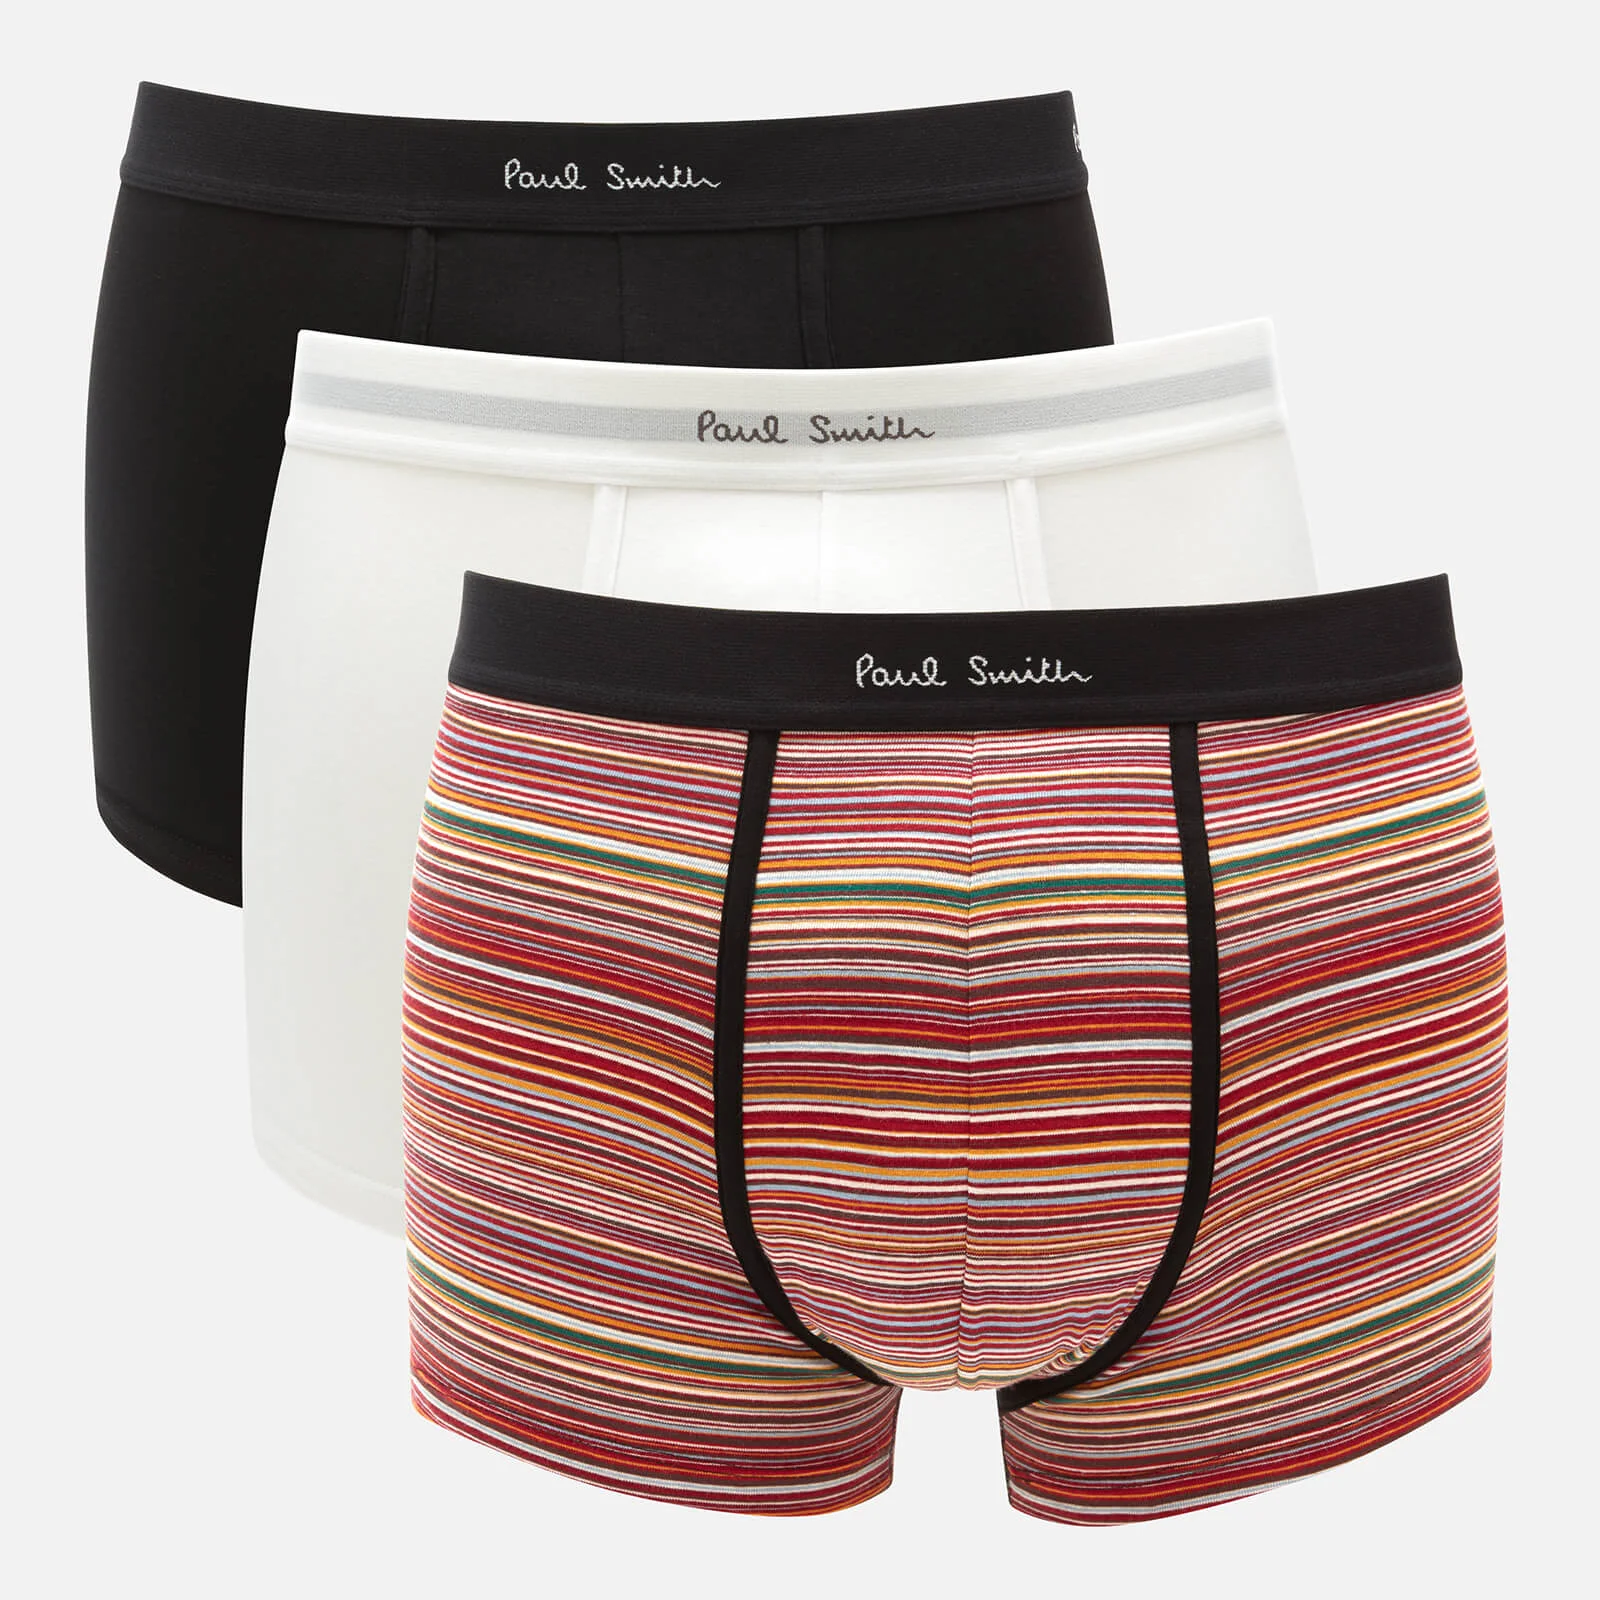 PS Paul Smith Men's 3 Pack Trunk Boxer Shorts - White/Stripe/Black Image 1